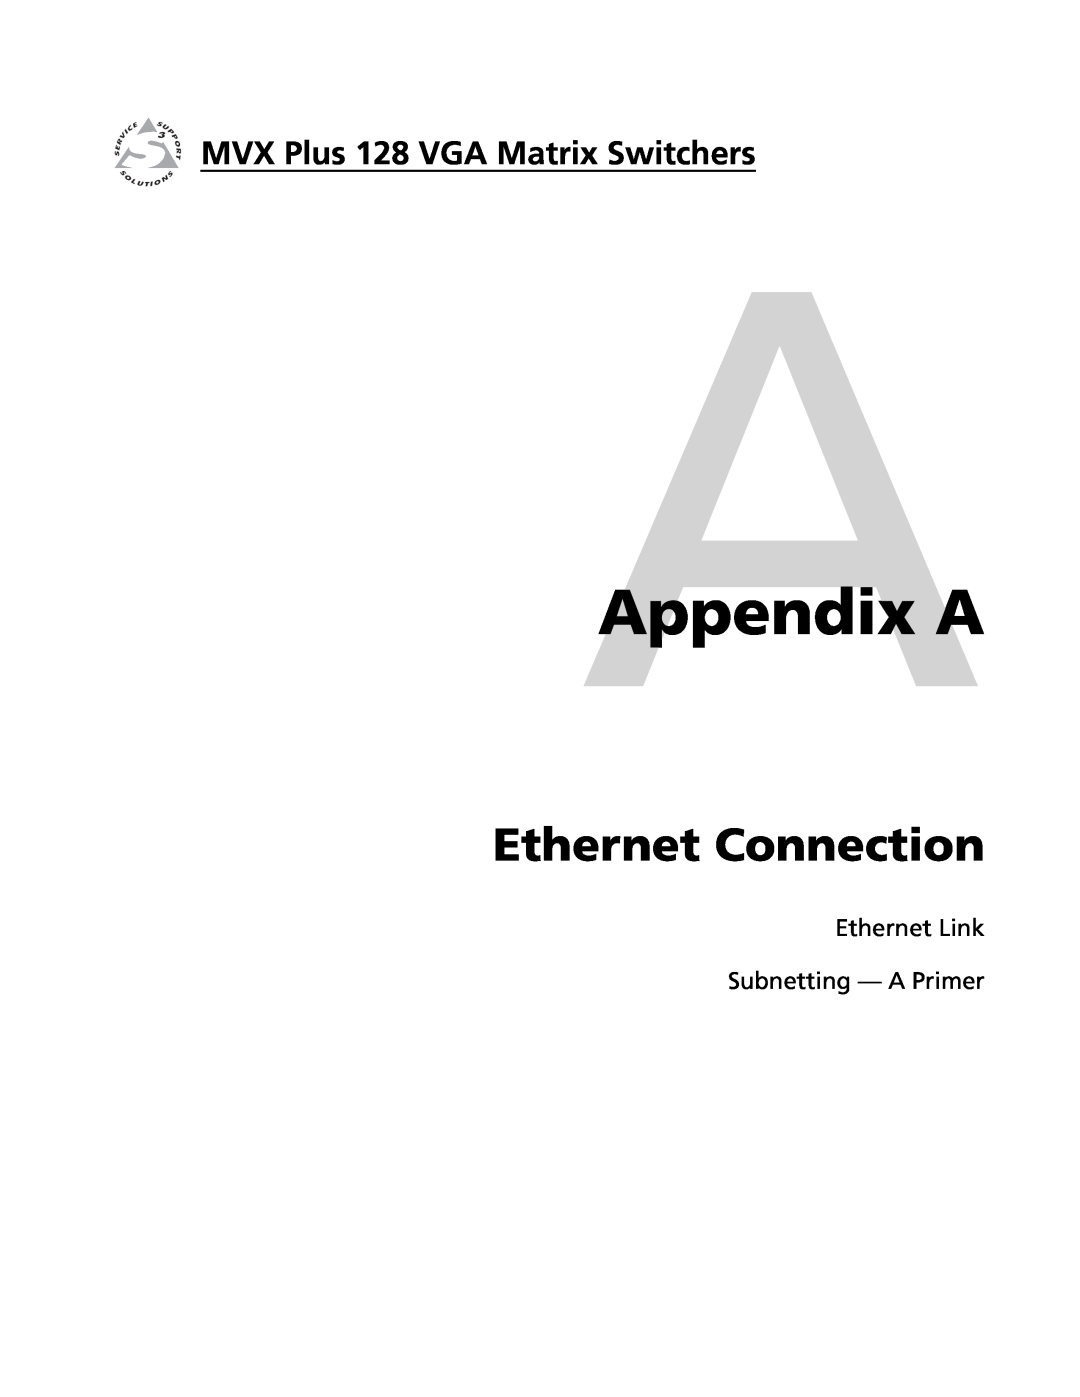 Extron electronic MVX PLUS 128 manual AAppendix A, Ethernet Connection, Ethernet Link Subnetting - A Primer 